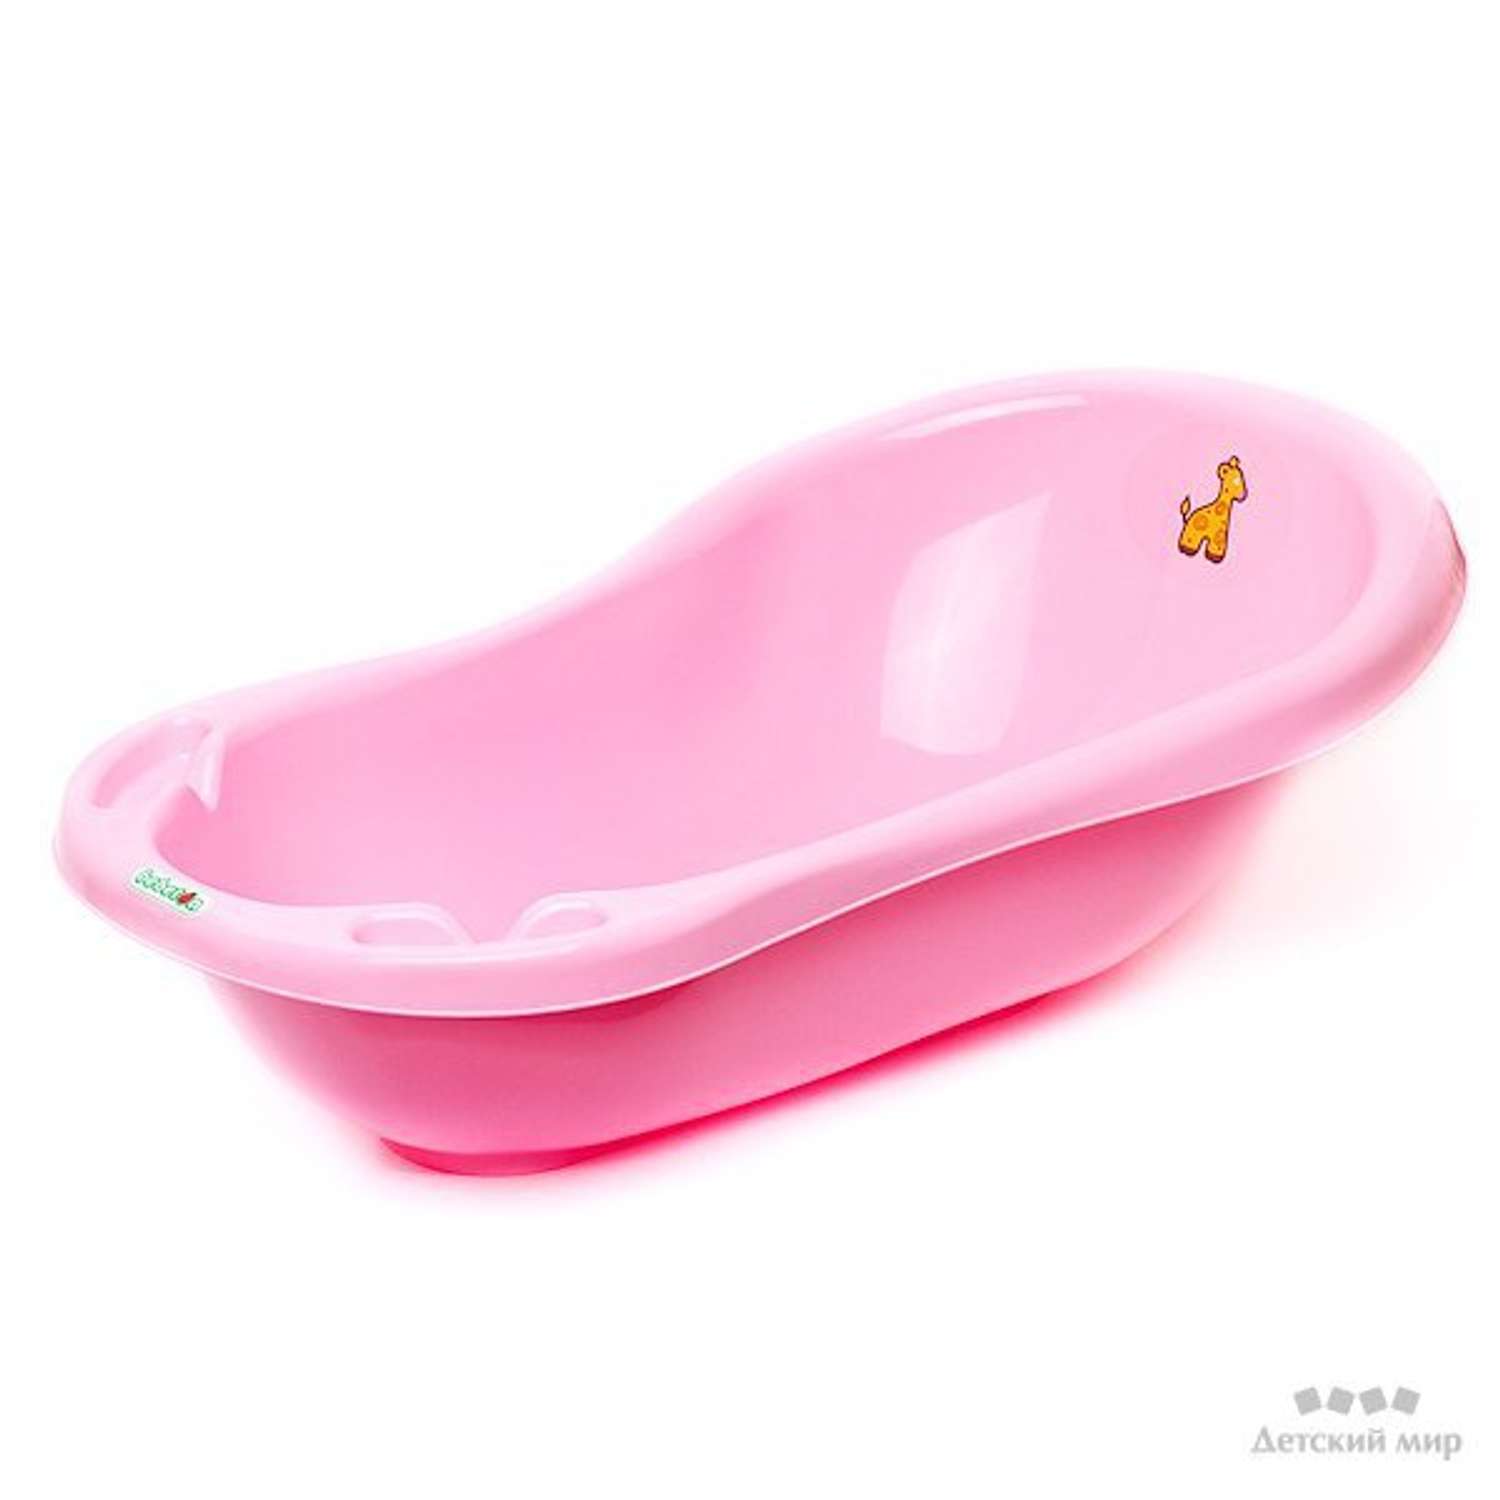 Ванночка Maltex Классик 100 см розовая - фото 1